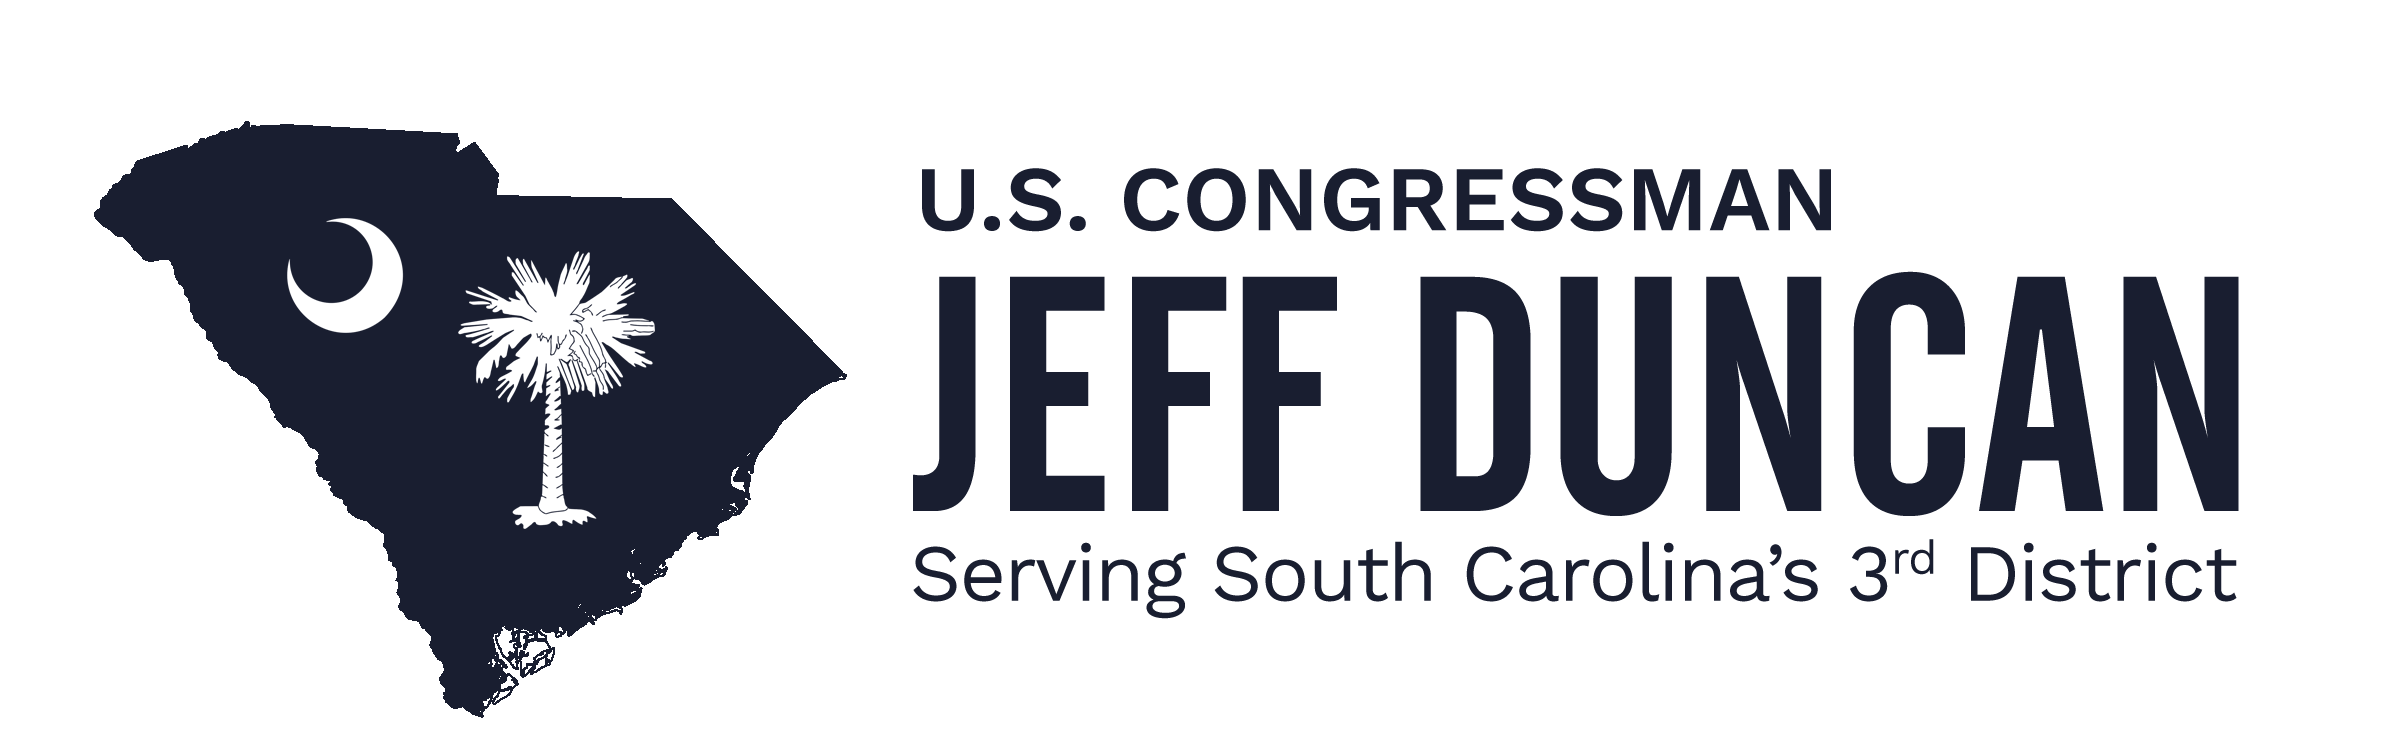 Congressman Jeff Duncan logo